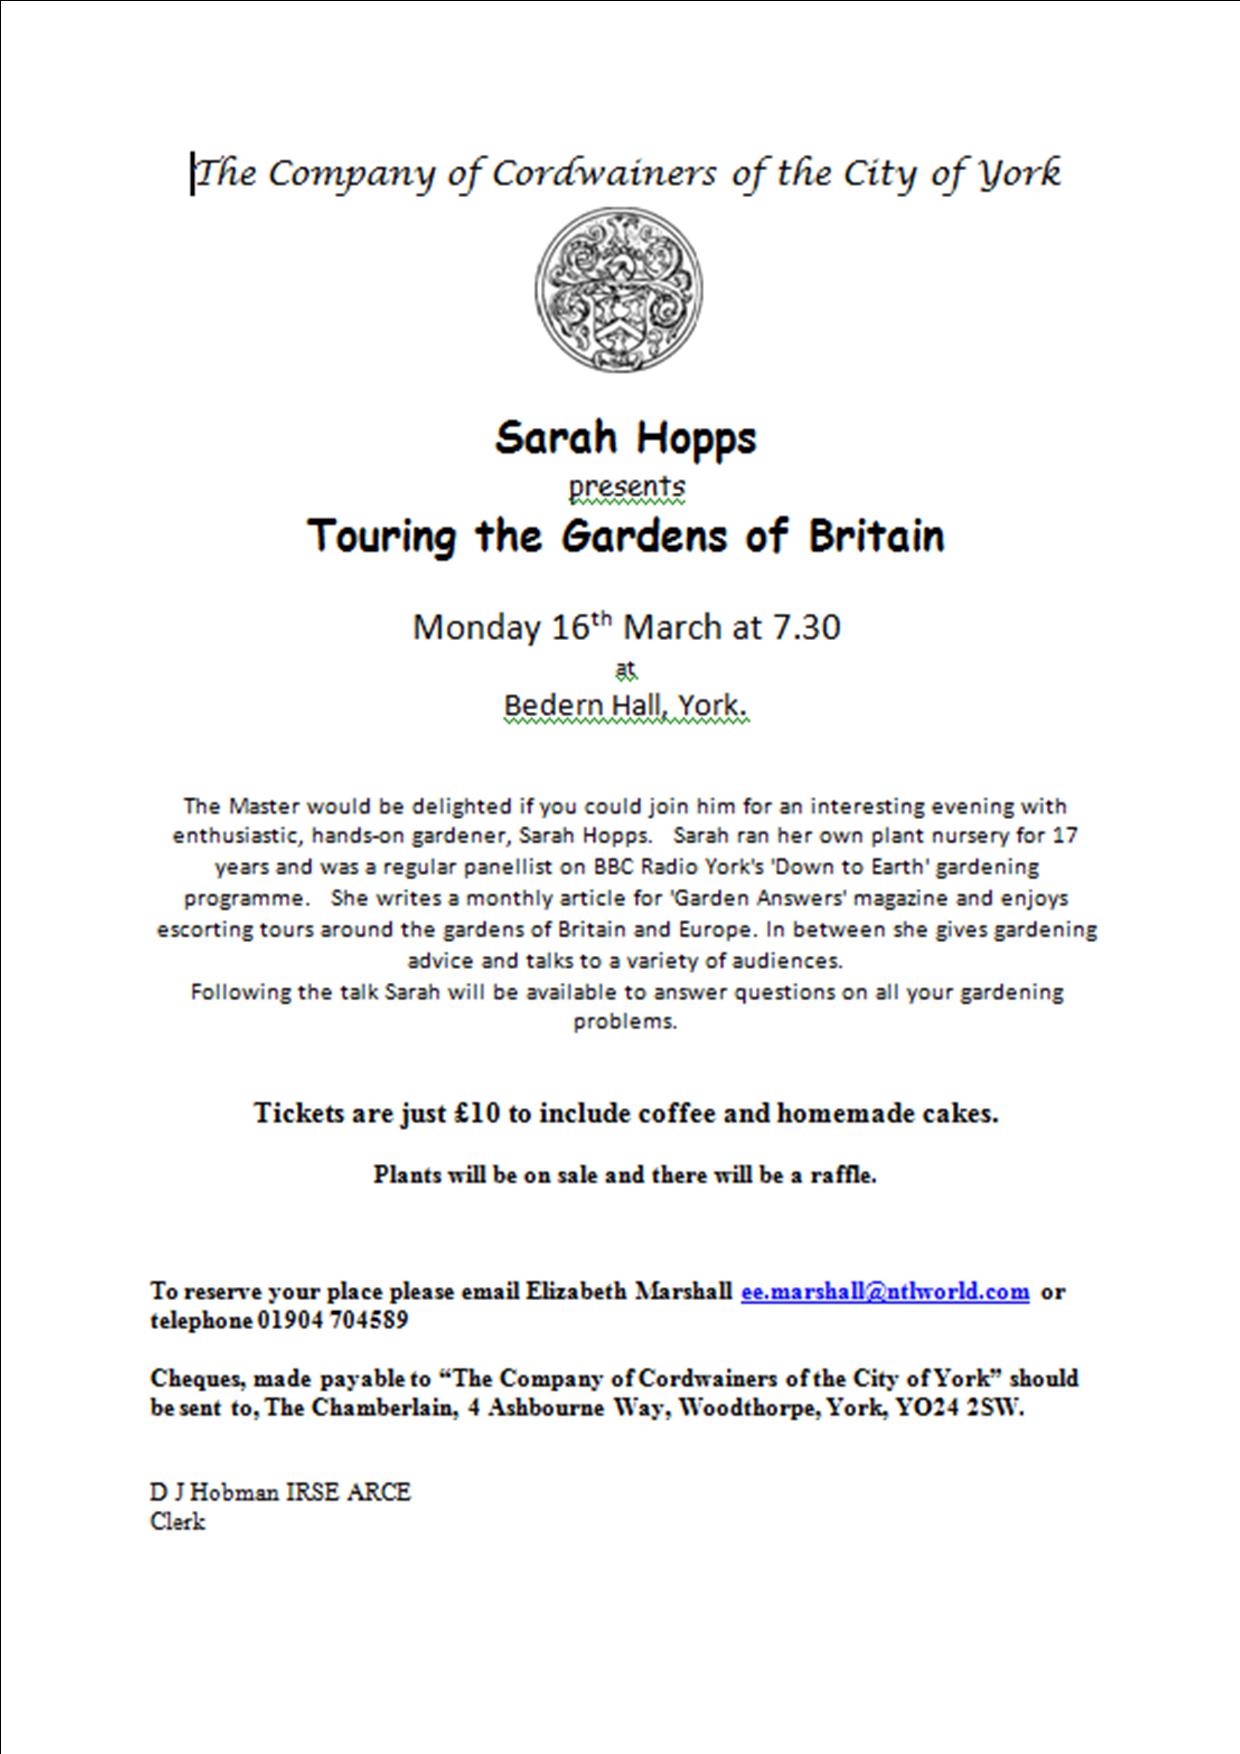 Sarah Hopps gardens of Britain